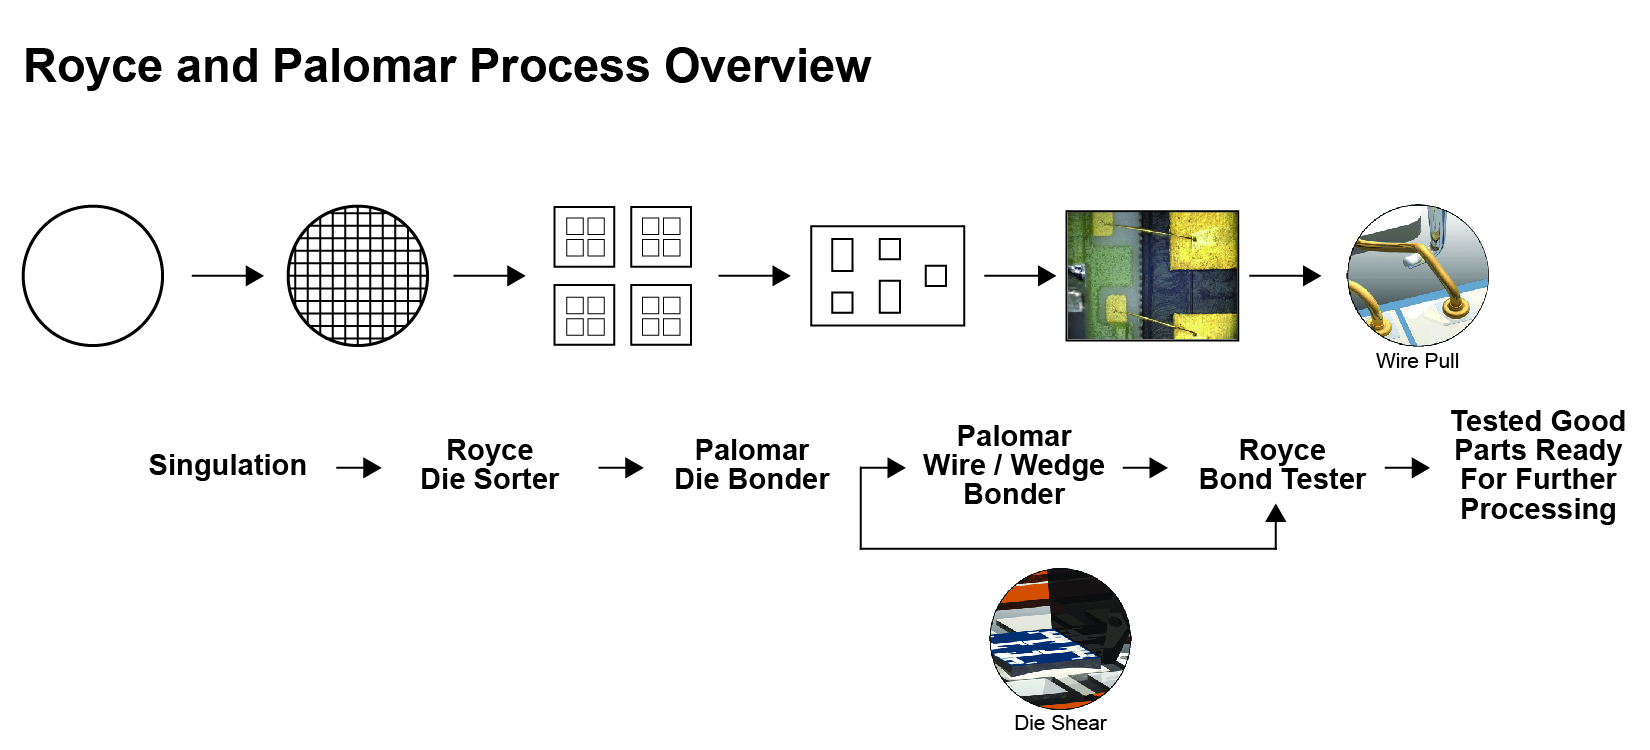 Royce_Palomar_Process_Overview.jpg